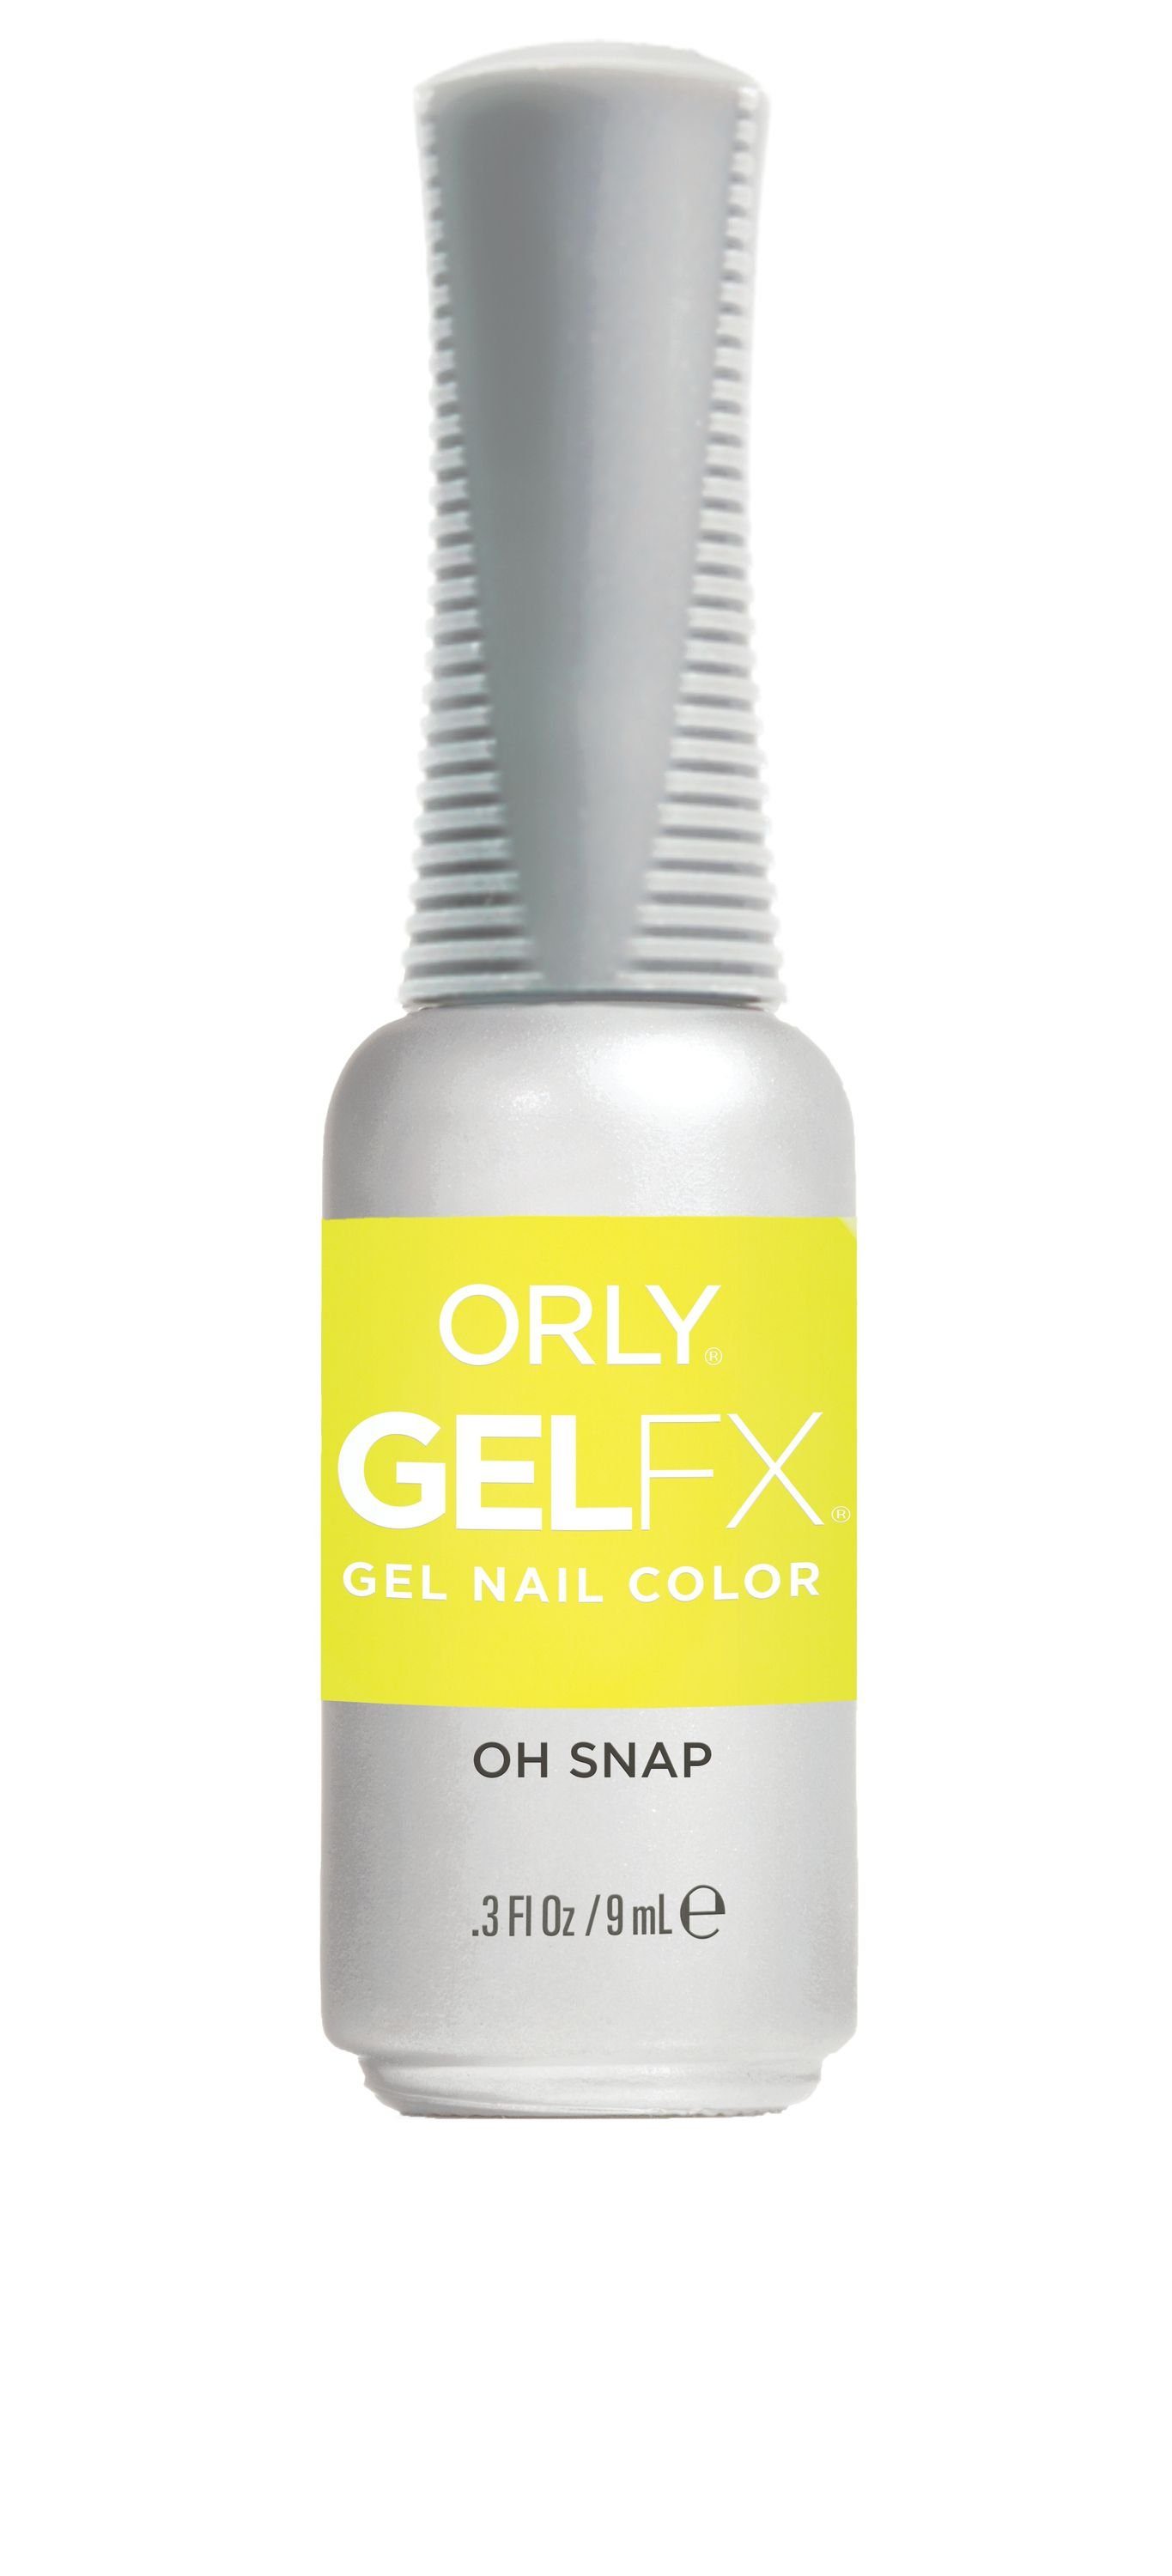 ORLY UV-Nagellack GEL FX Oh Snap, 9ML | Nagellacke